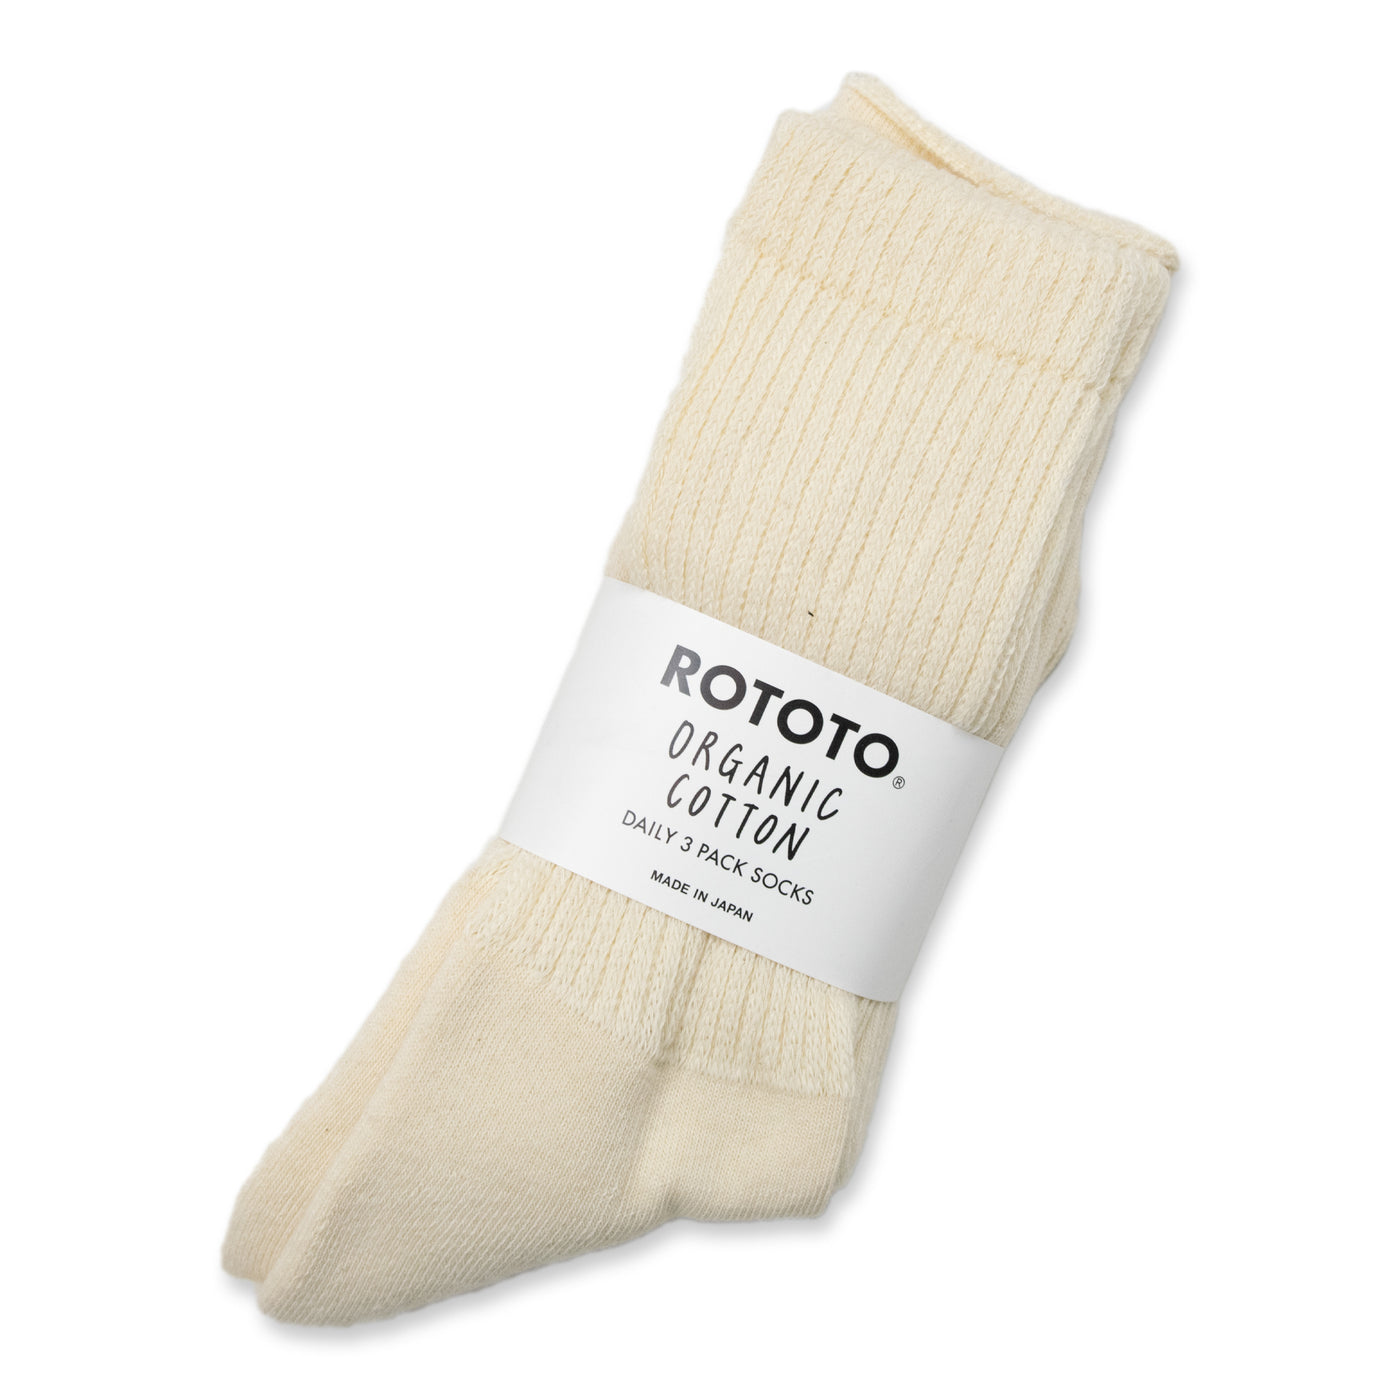  Rototo Organic Cotton Daily Three Pack Socks Ecru Made In Japan 